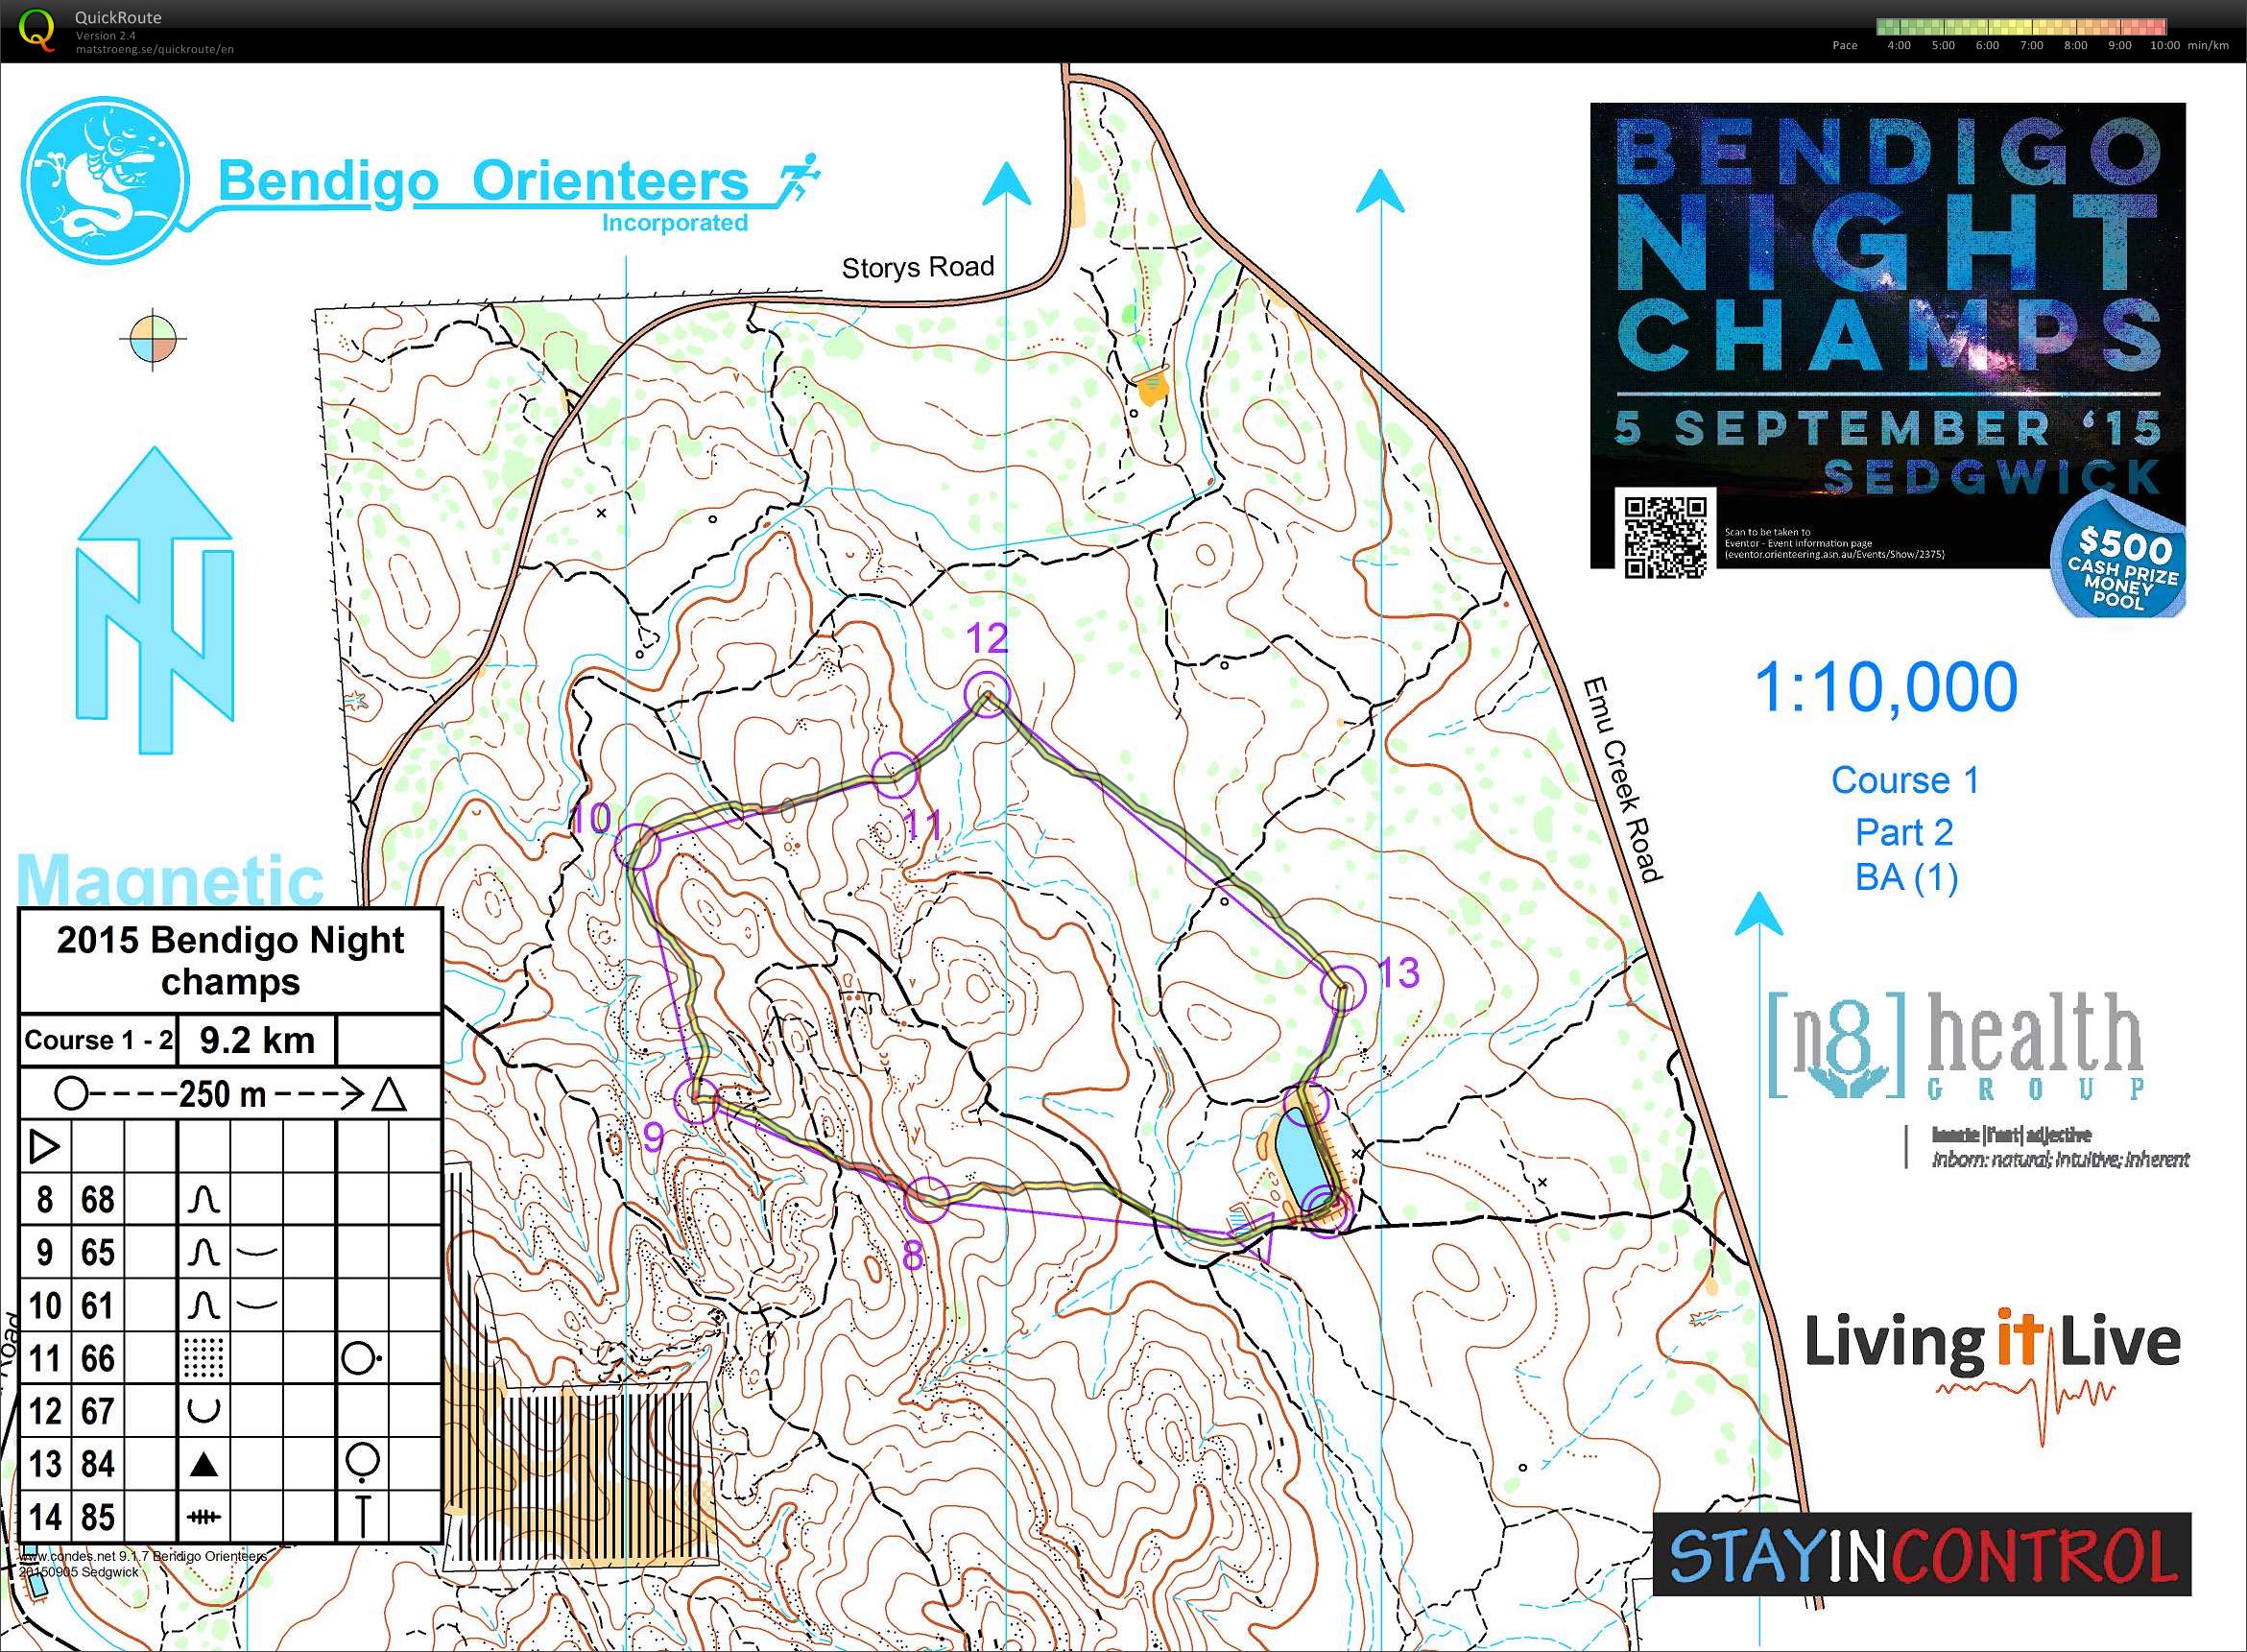 Bendigo Night Champs - Map 2 (05/09/2015)